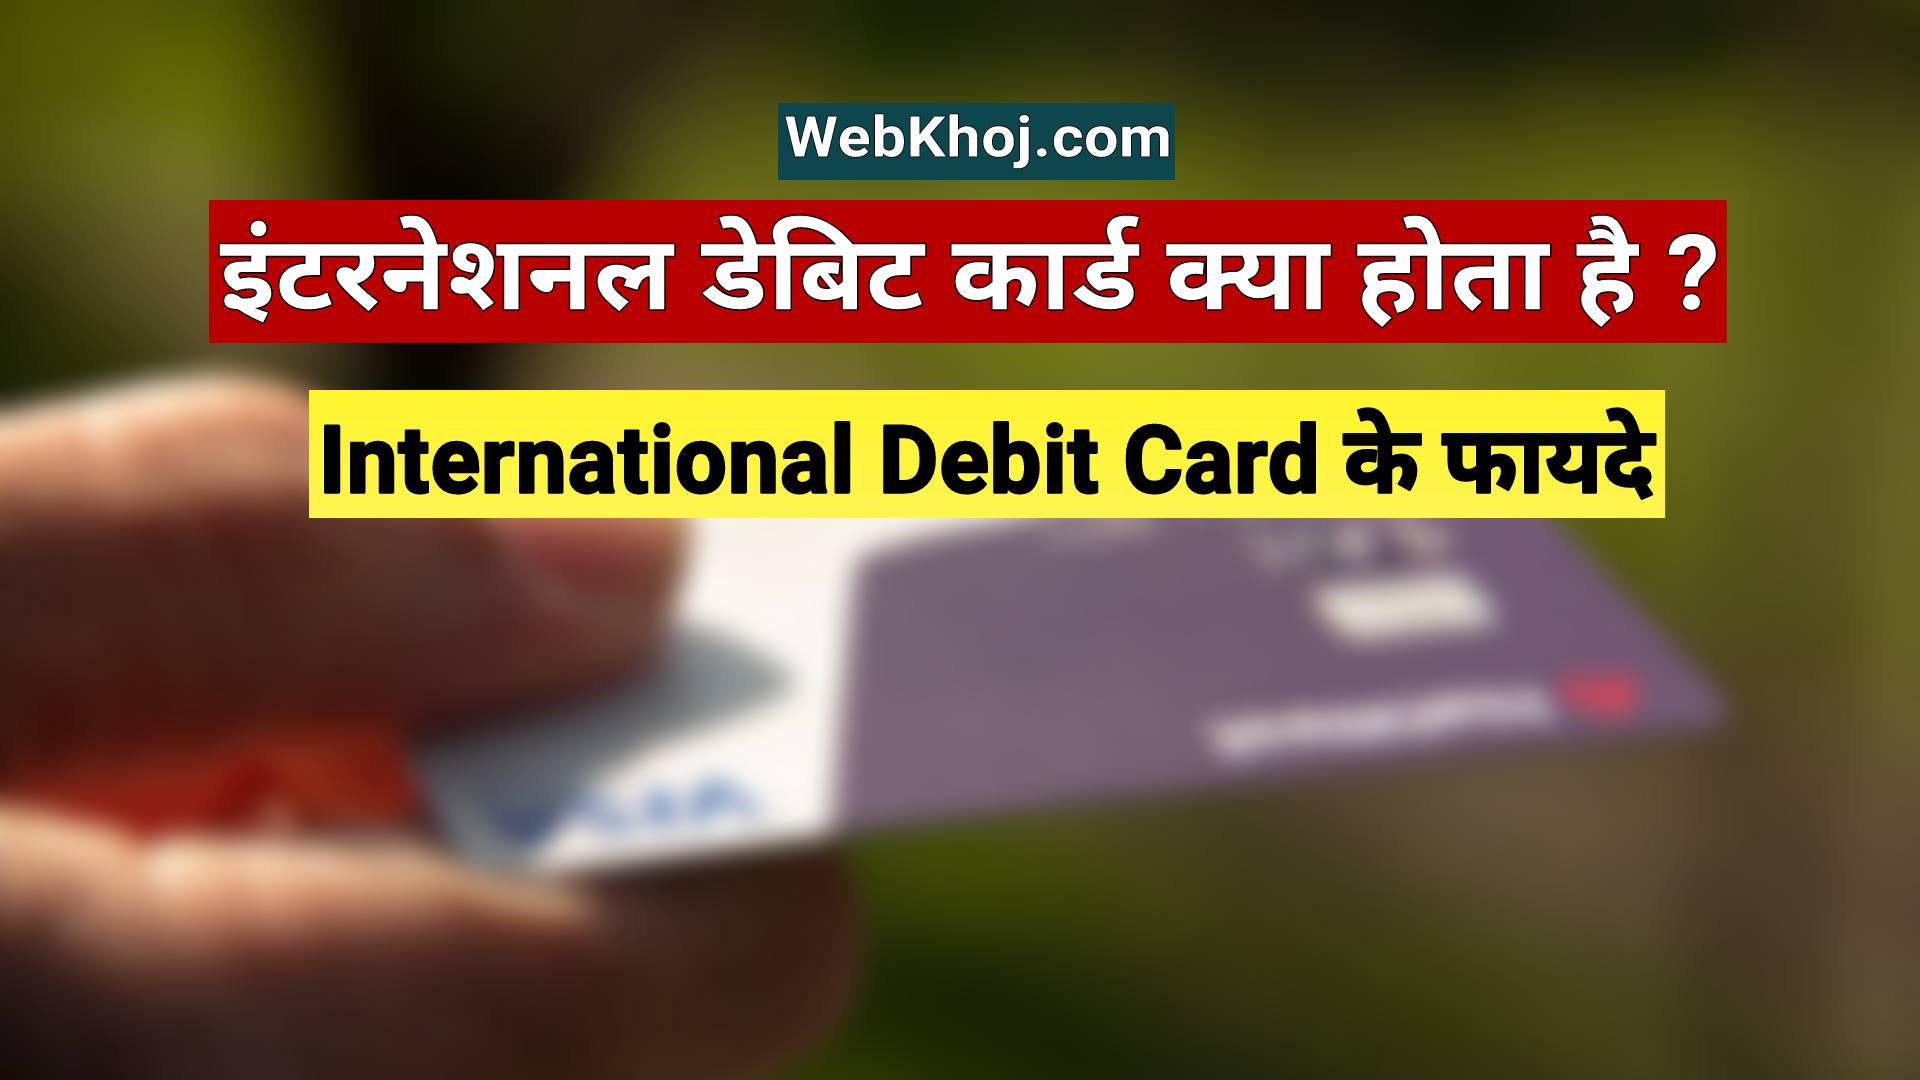 International debit card kya hota hai